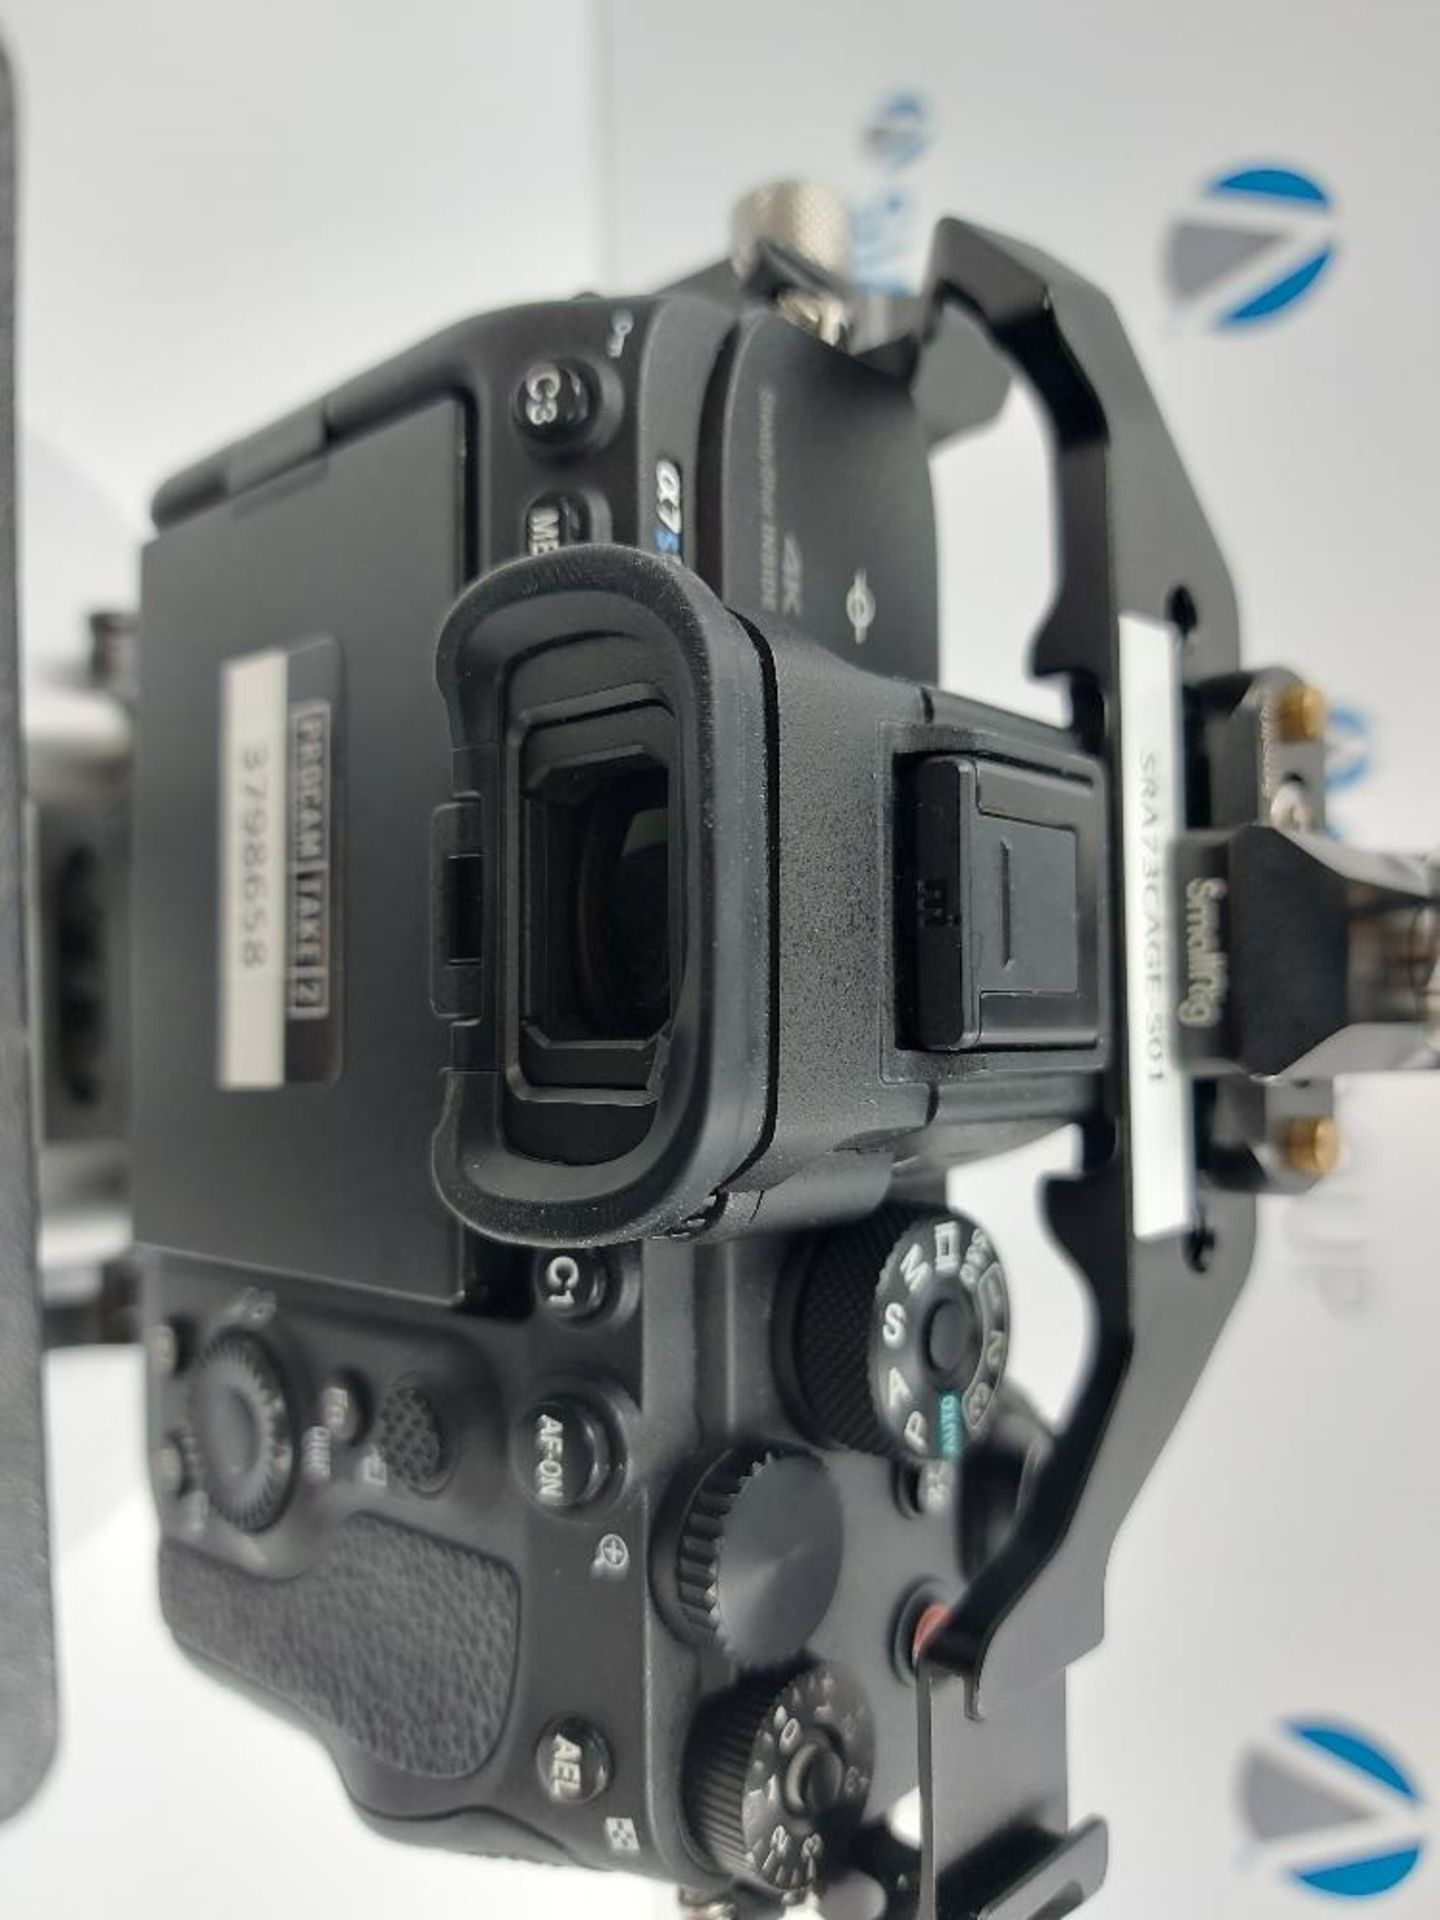 Sony A7S Mark III Full-Frame Mirrorless Camera - Image 4 of 7